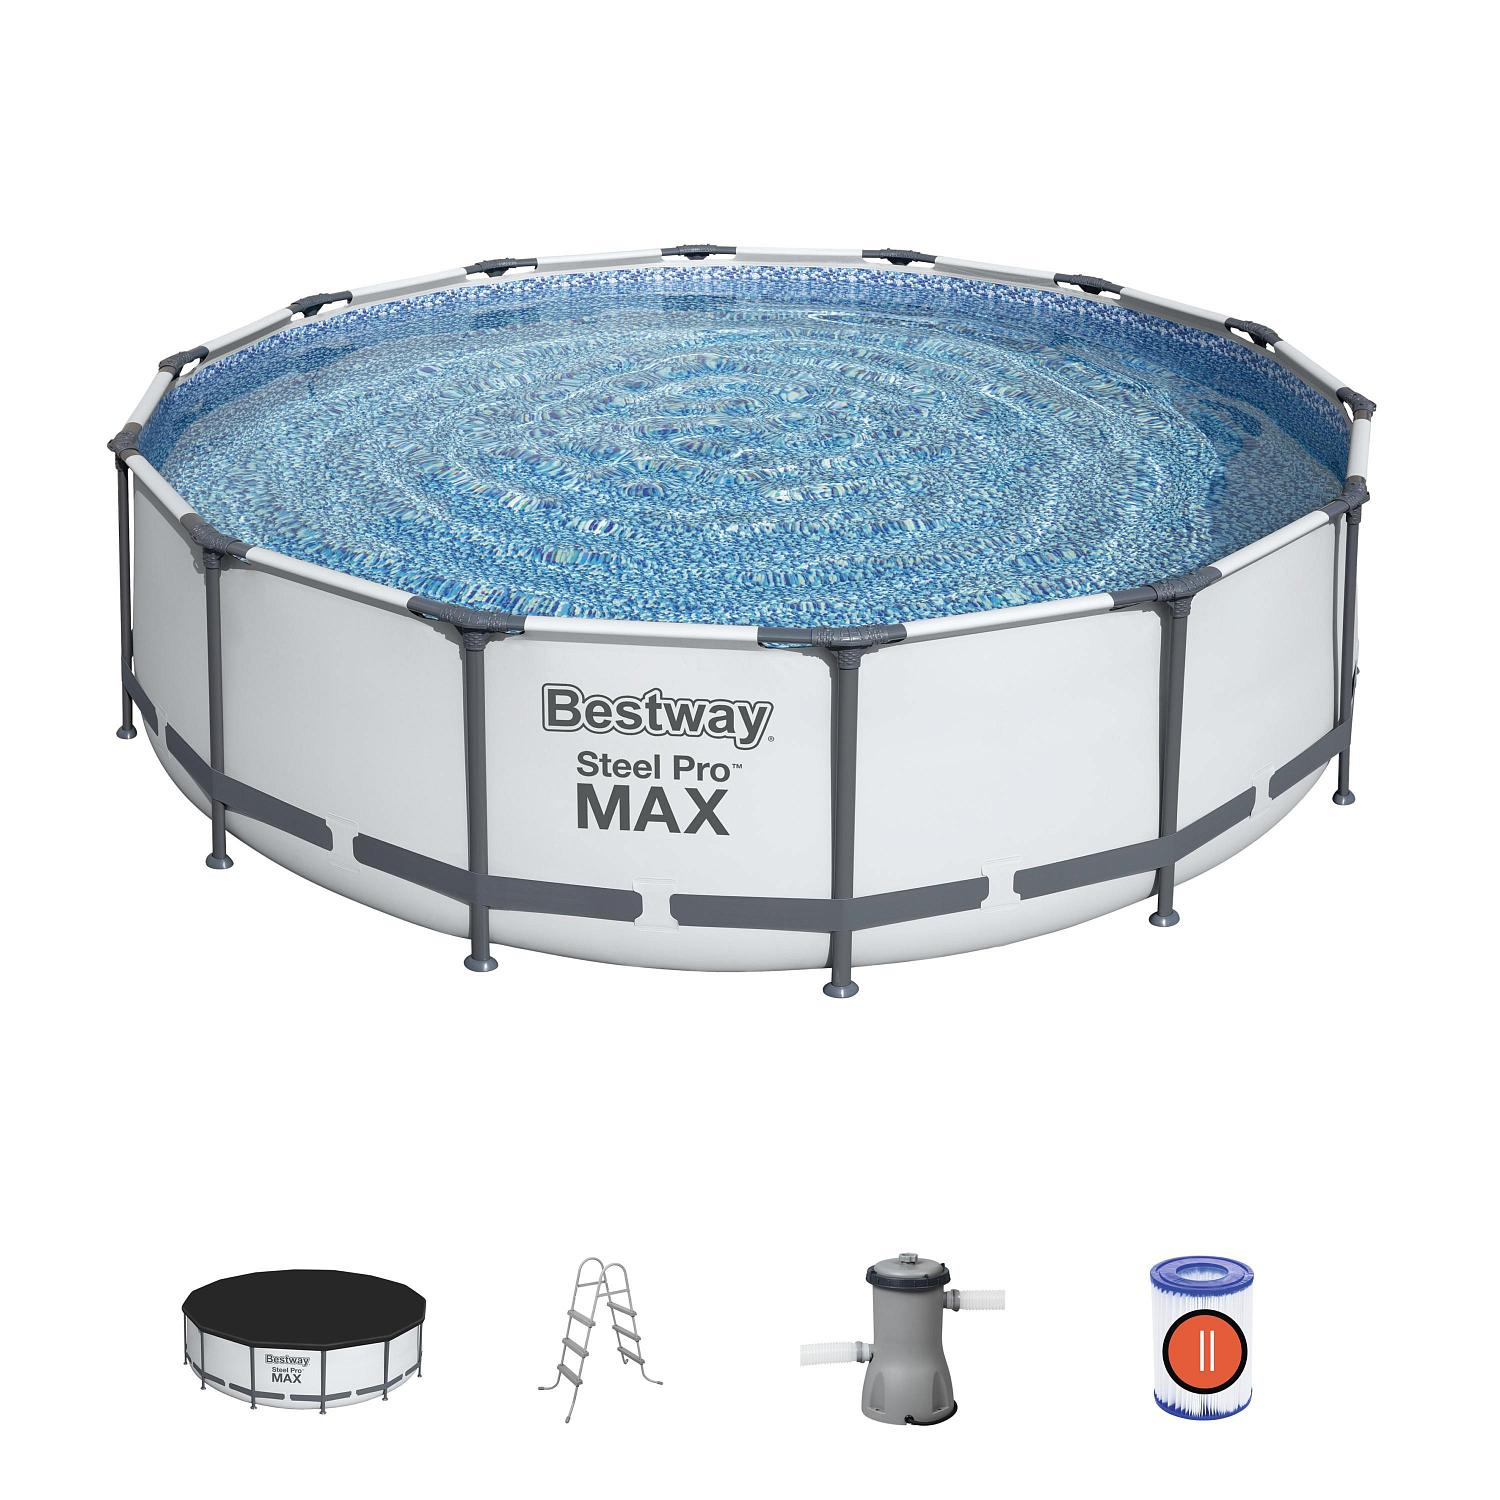 Bestway Steel Pro Max 56950 BW из каталога каркасных бассейнов в Самаре по цене 61000 ₽